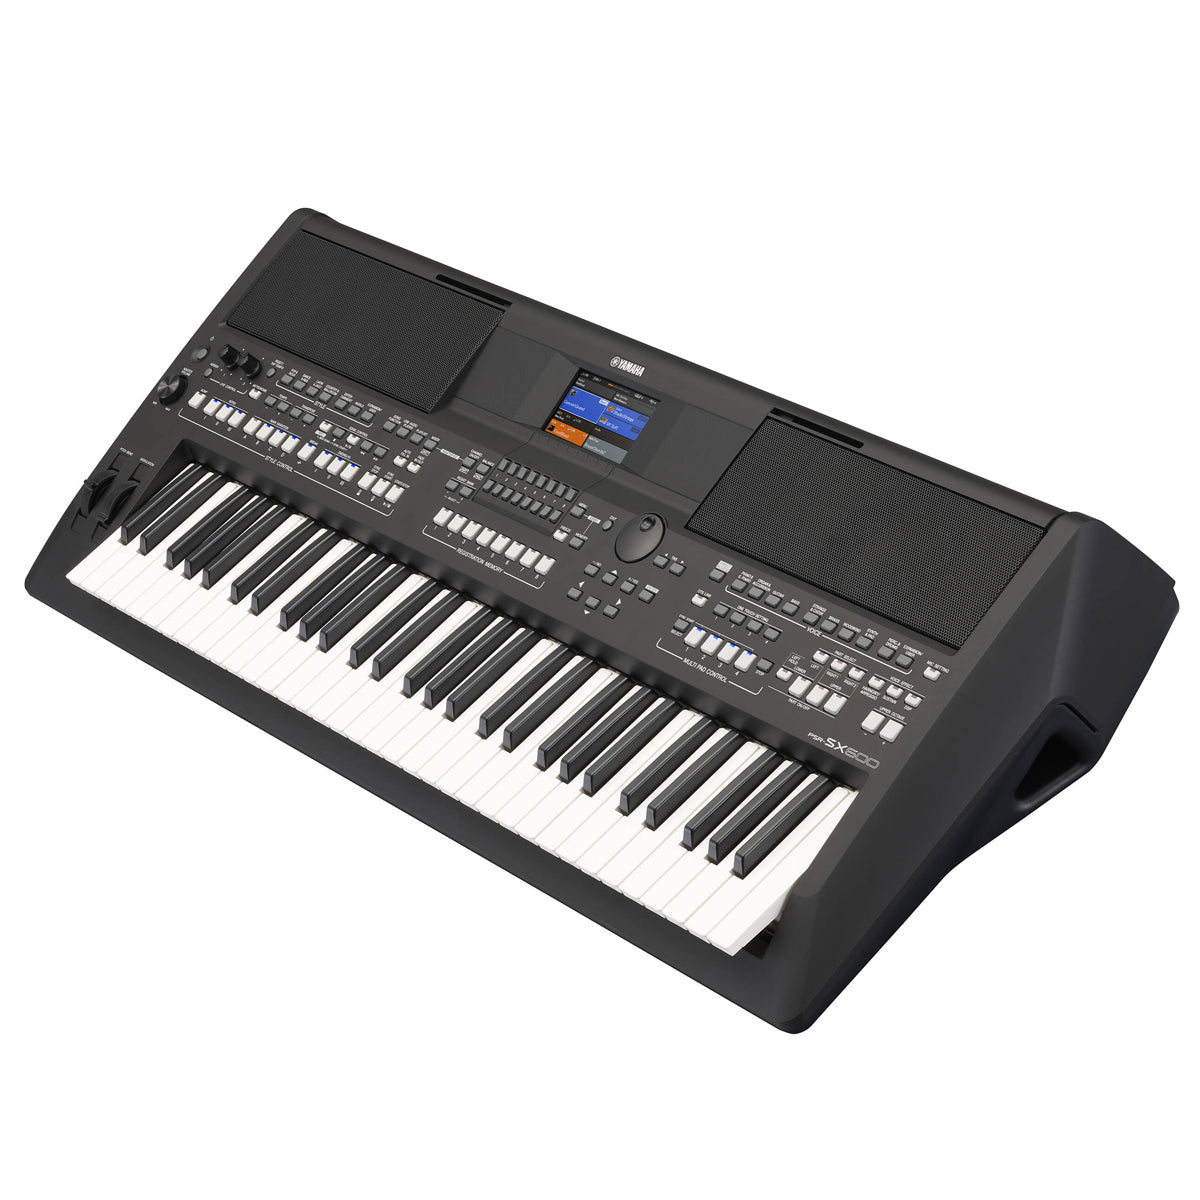 Yamaha PSRSX600 Arranger Workstation keyboard